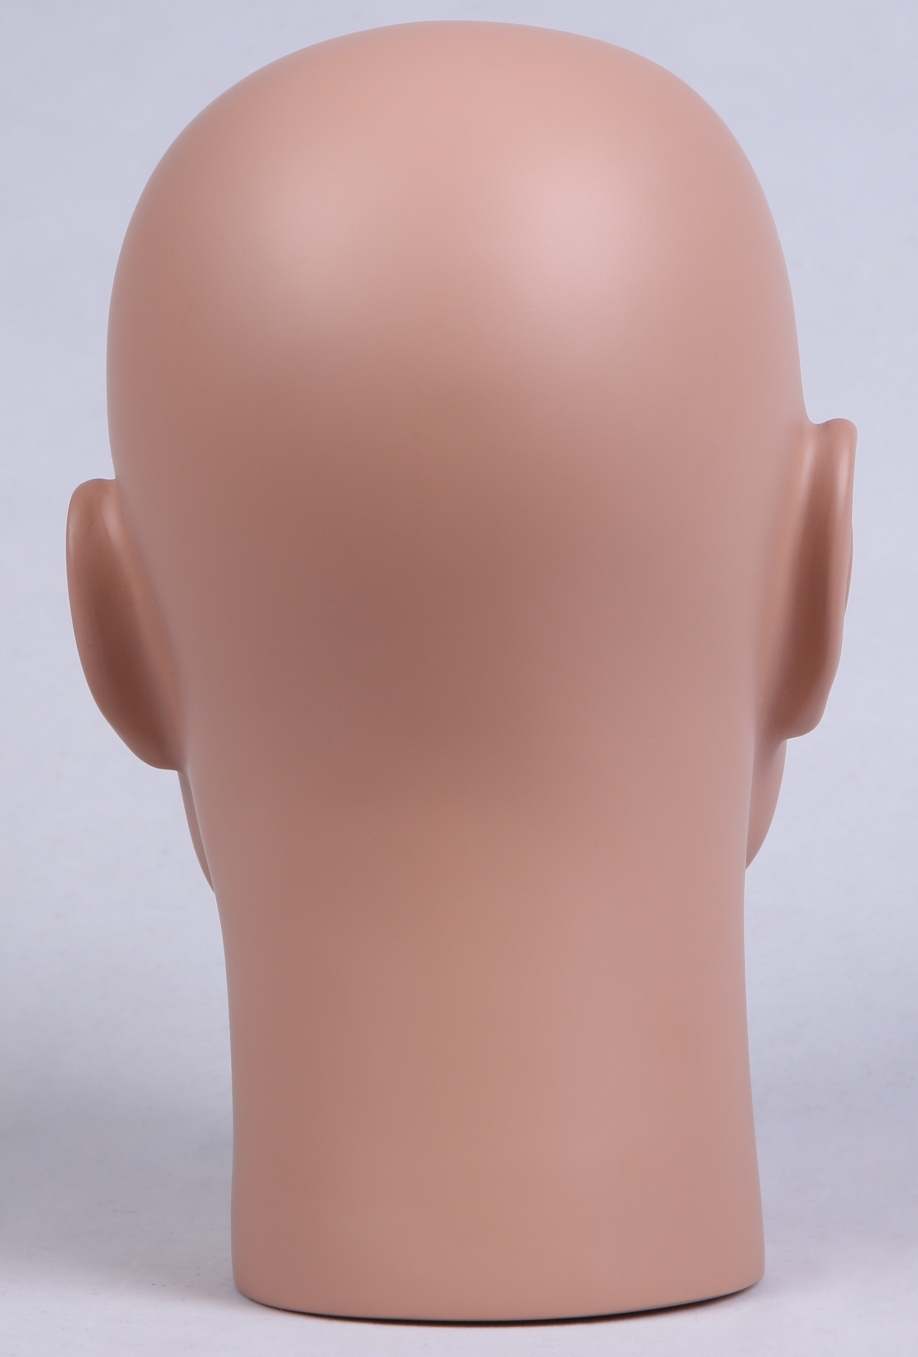 Male Mannequin Head MM-ERABLACK-PS